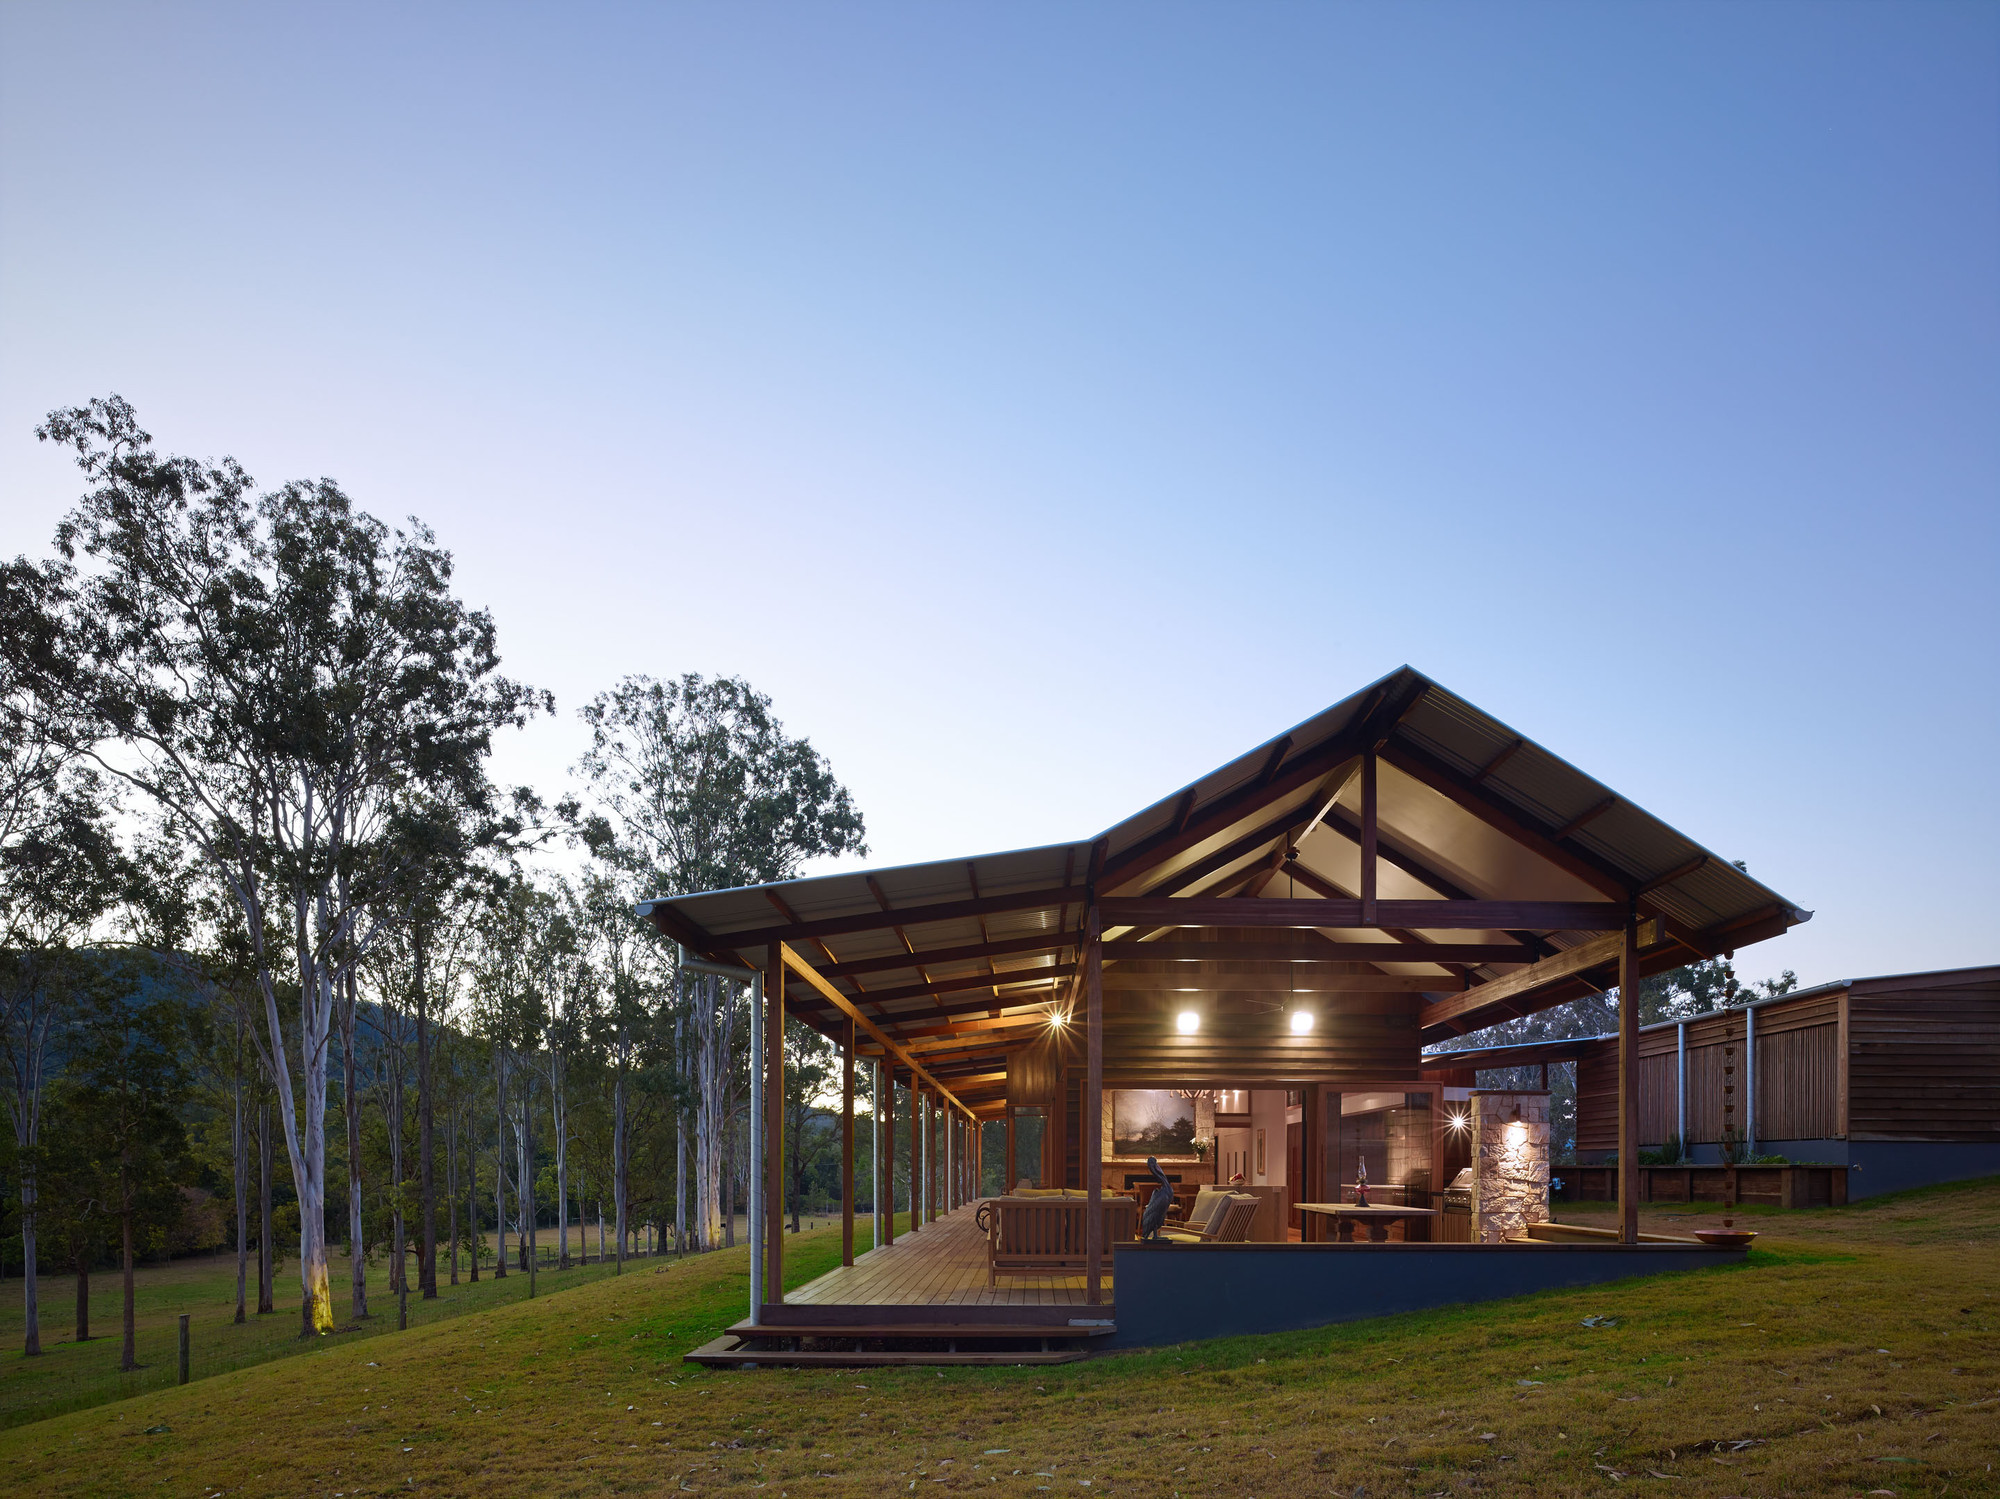 hinterland house captures the spirit of rural australian style